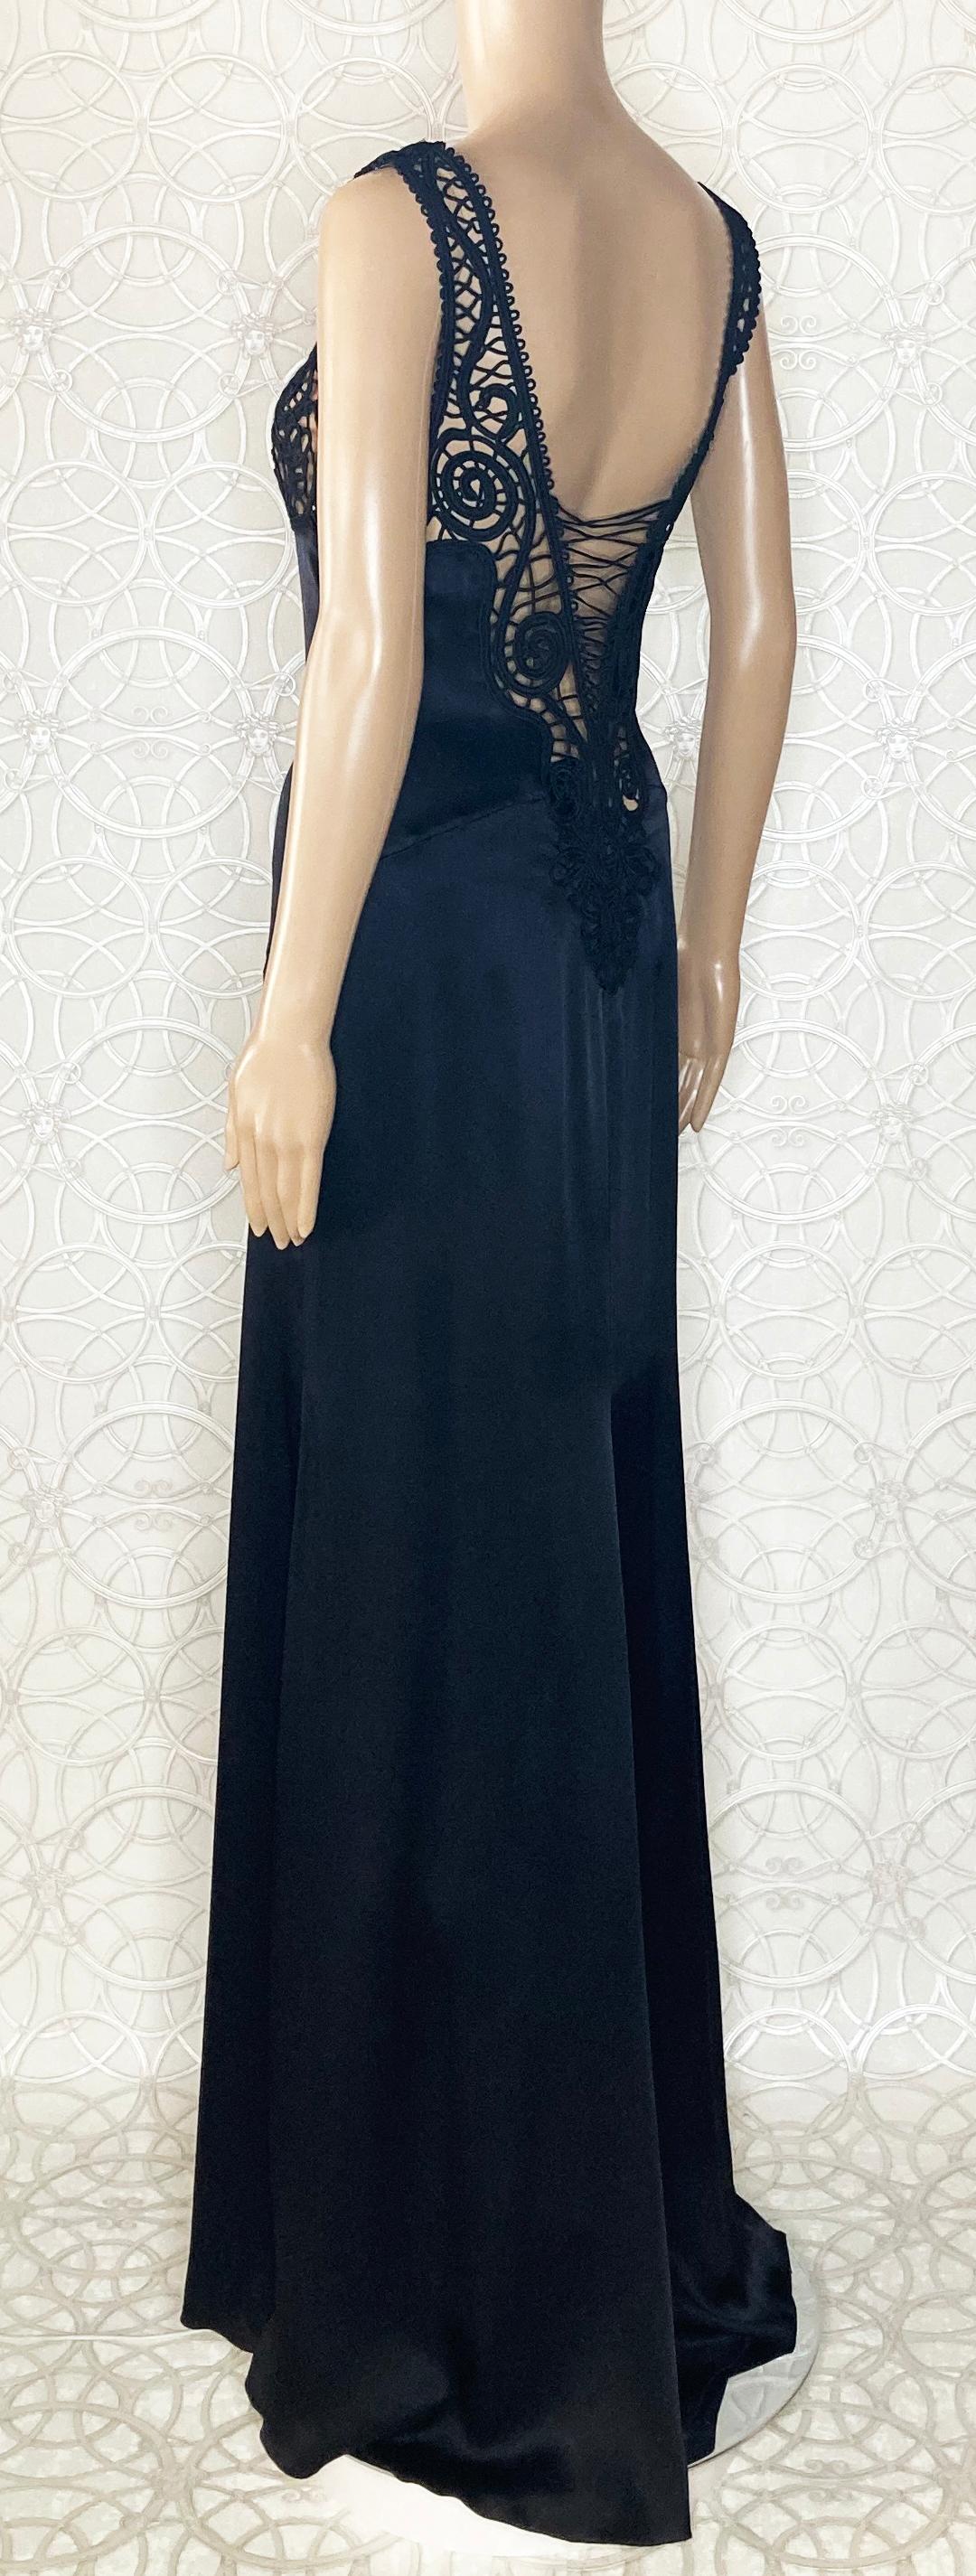 Black NEW VERSACE BLACK SILK MACRAME LONG DRESS Gown 42 - 6 For Sale